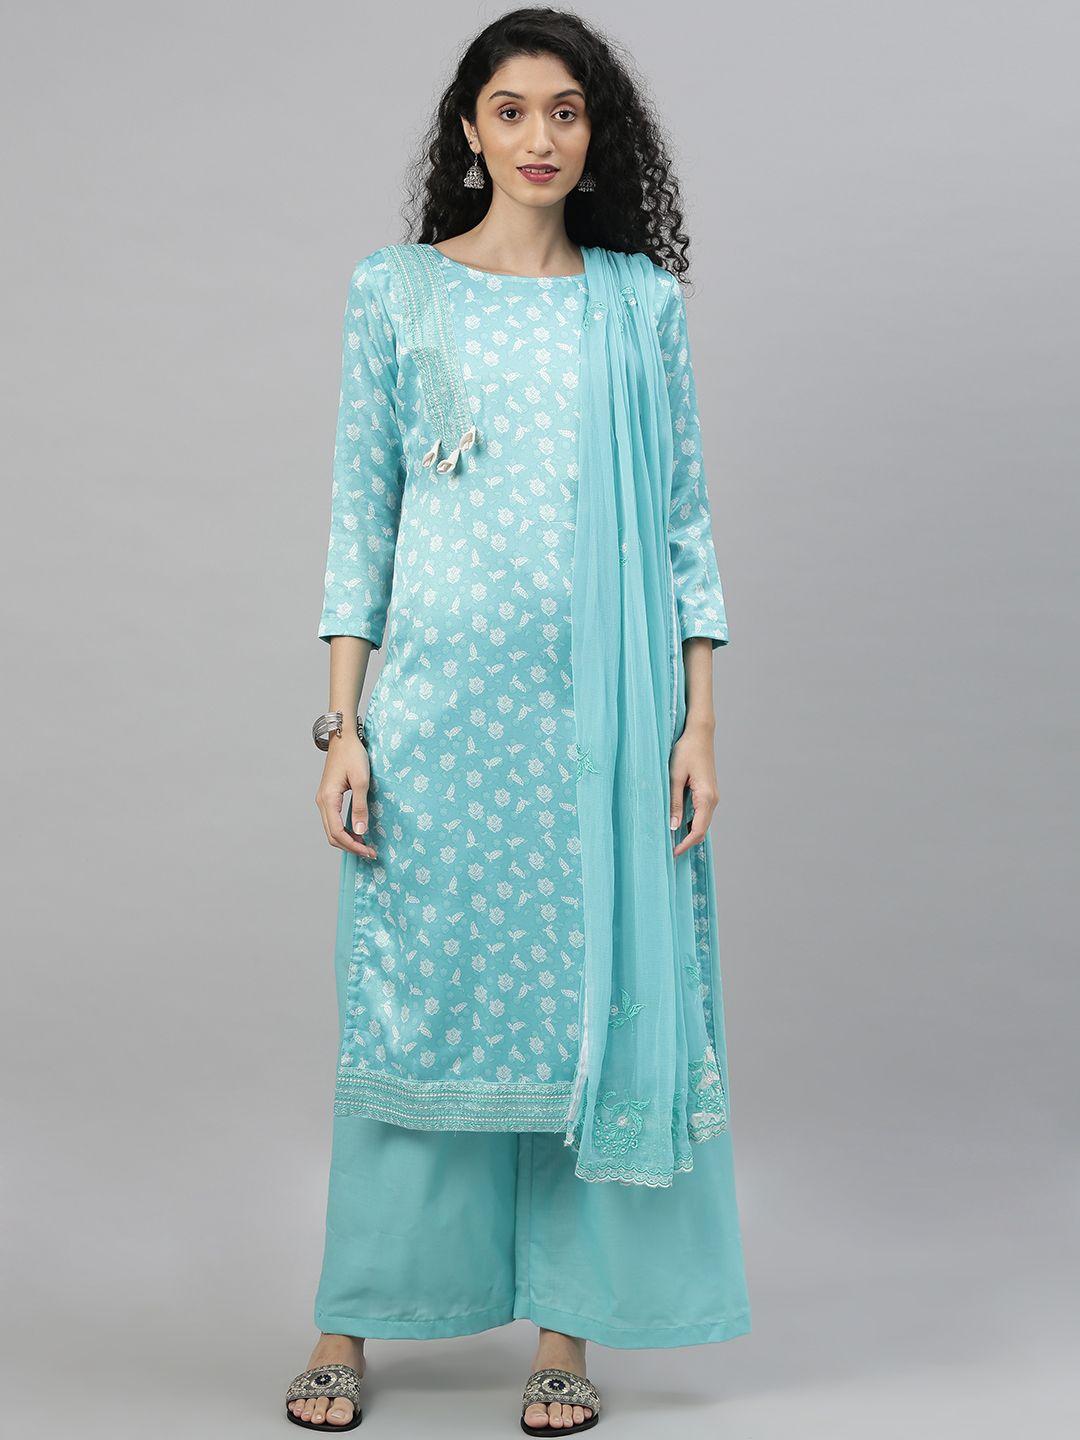 divastri turquoise blue & white satin unstitched dress material